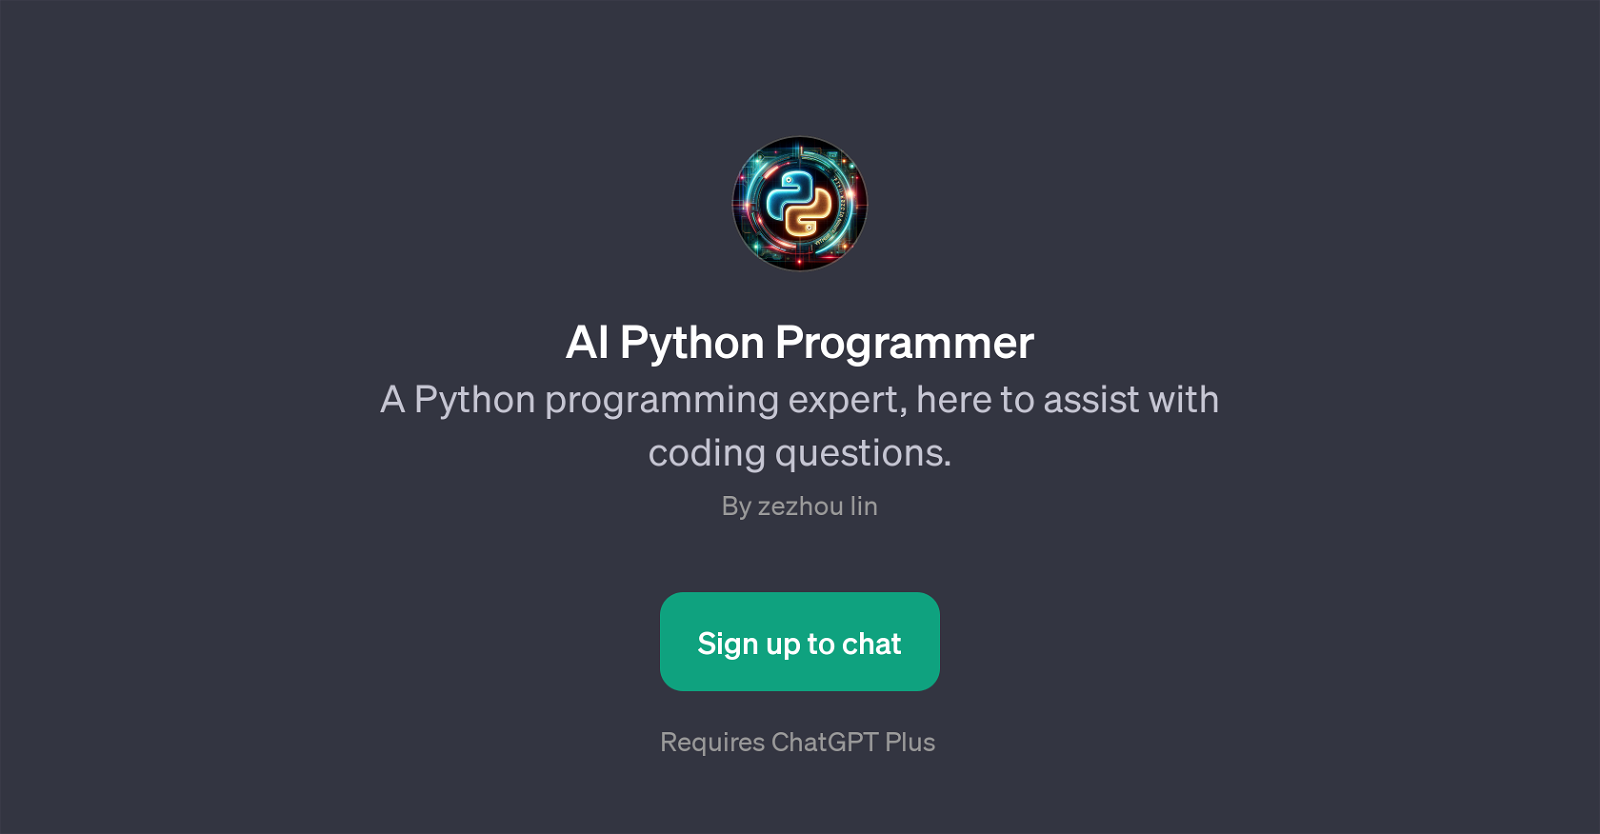 AI Python Programmer website